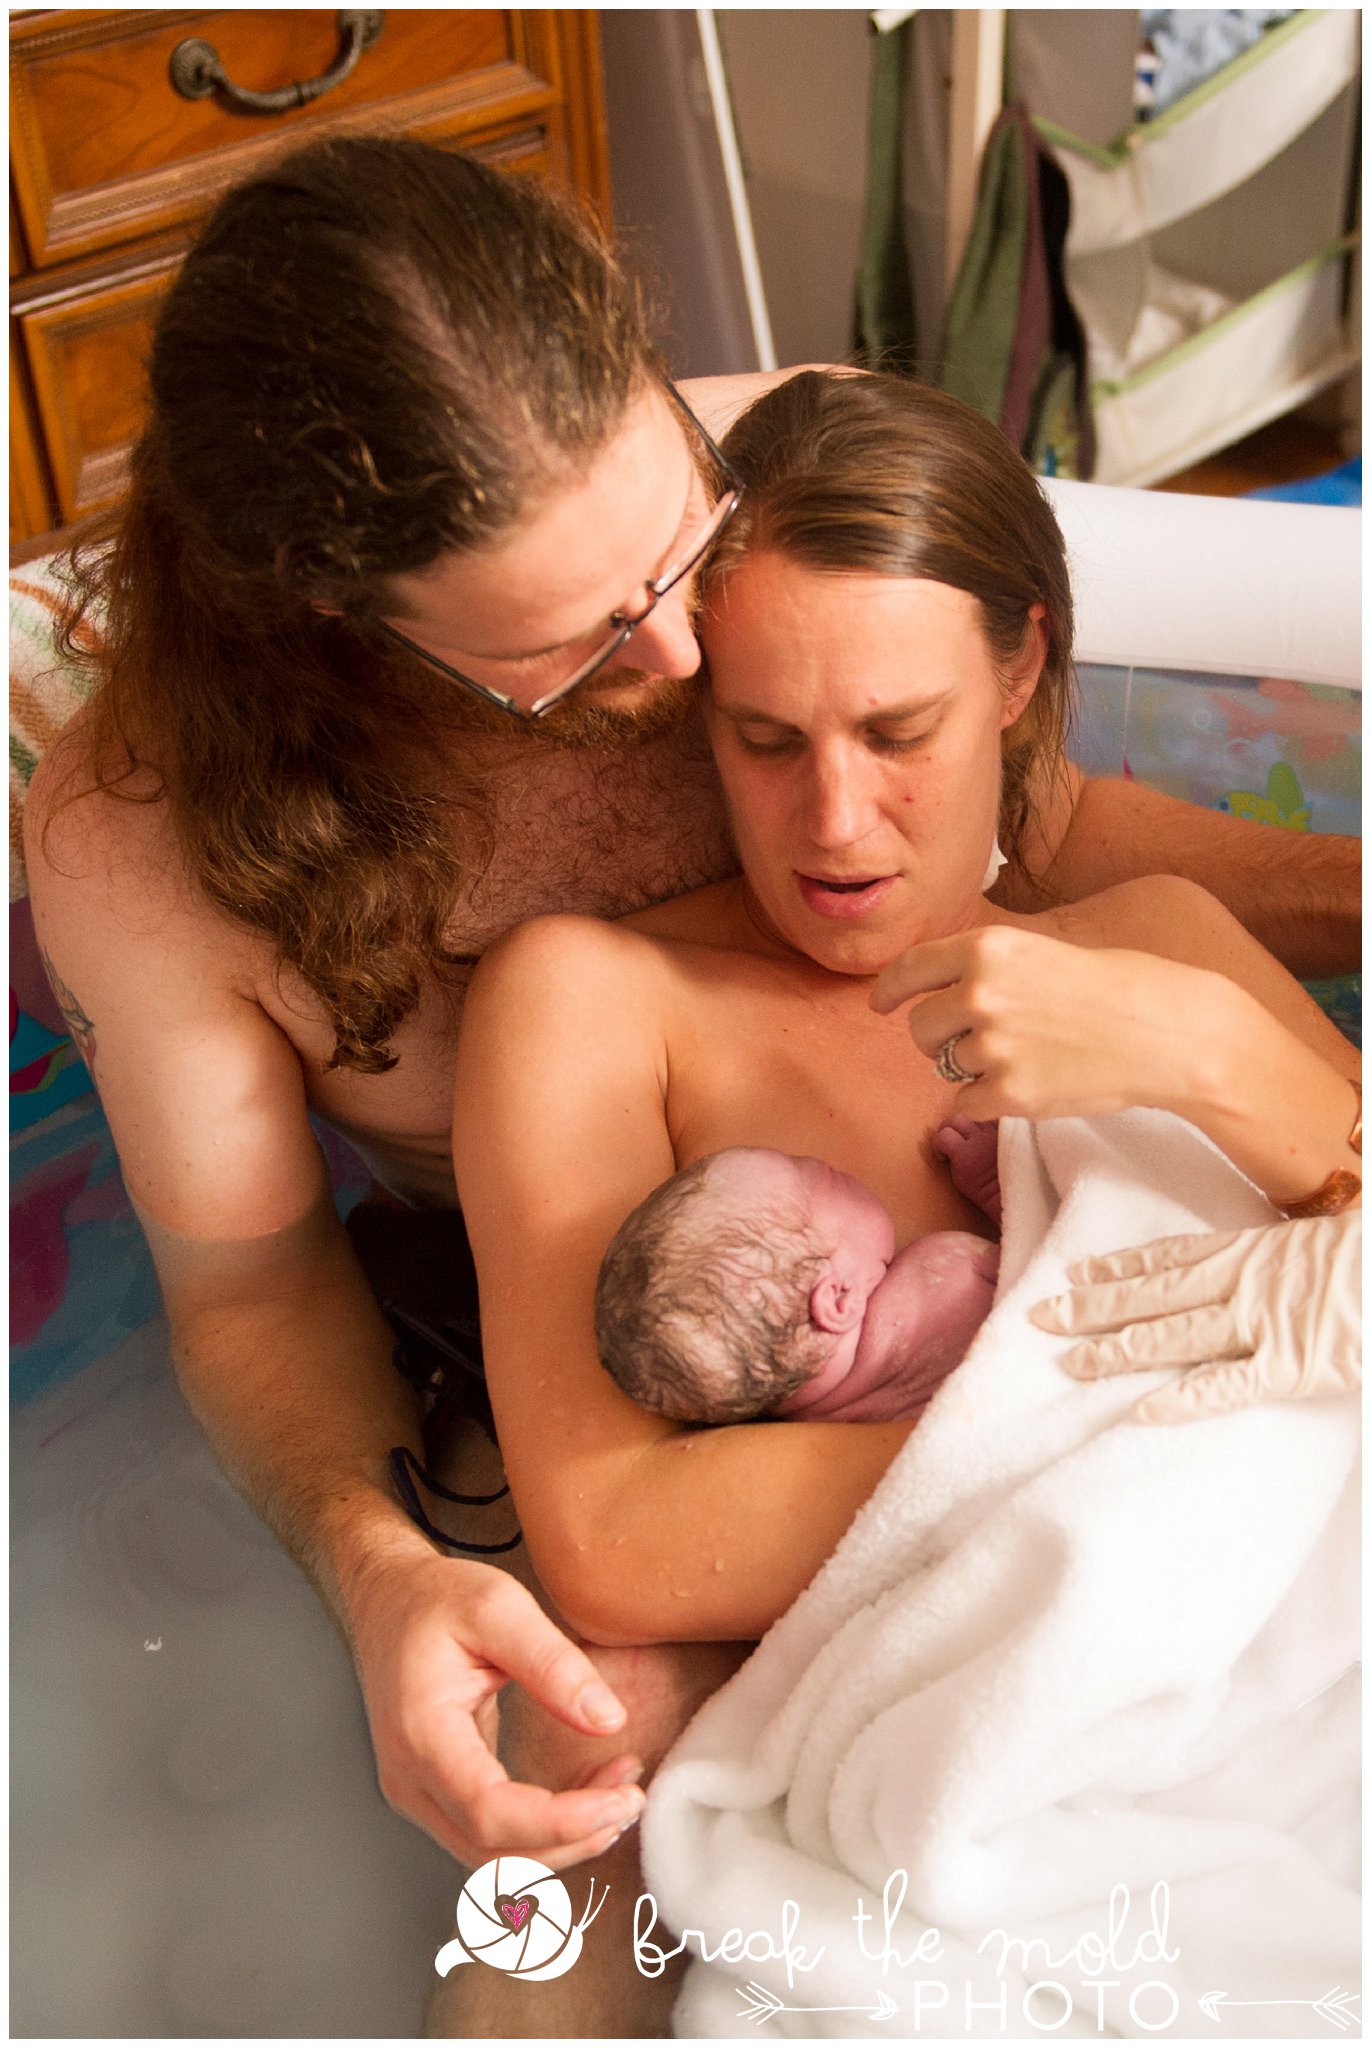 break-the-mold-photo-birth-story-home-water-birth-photo_5717.jpg